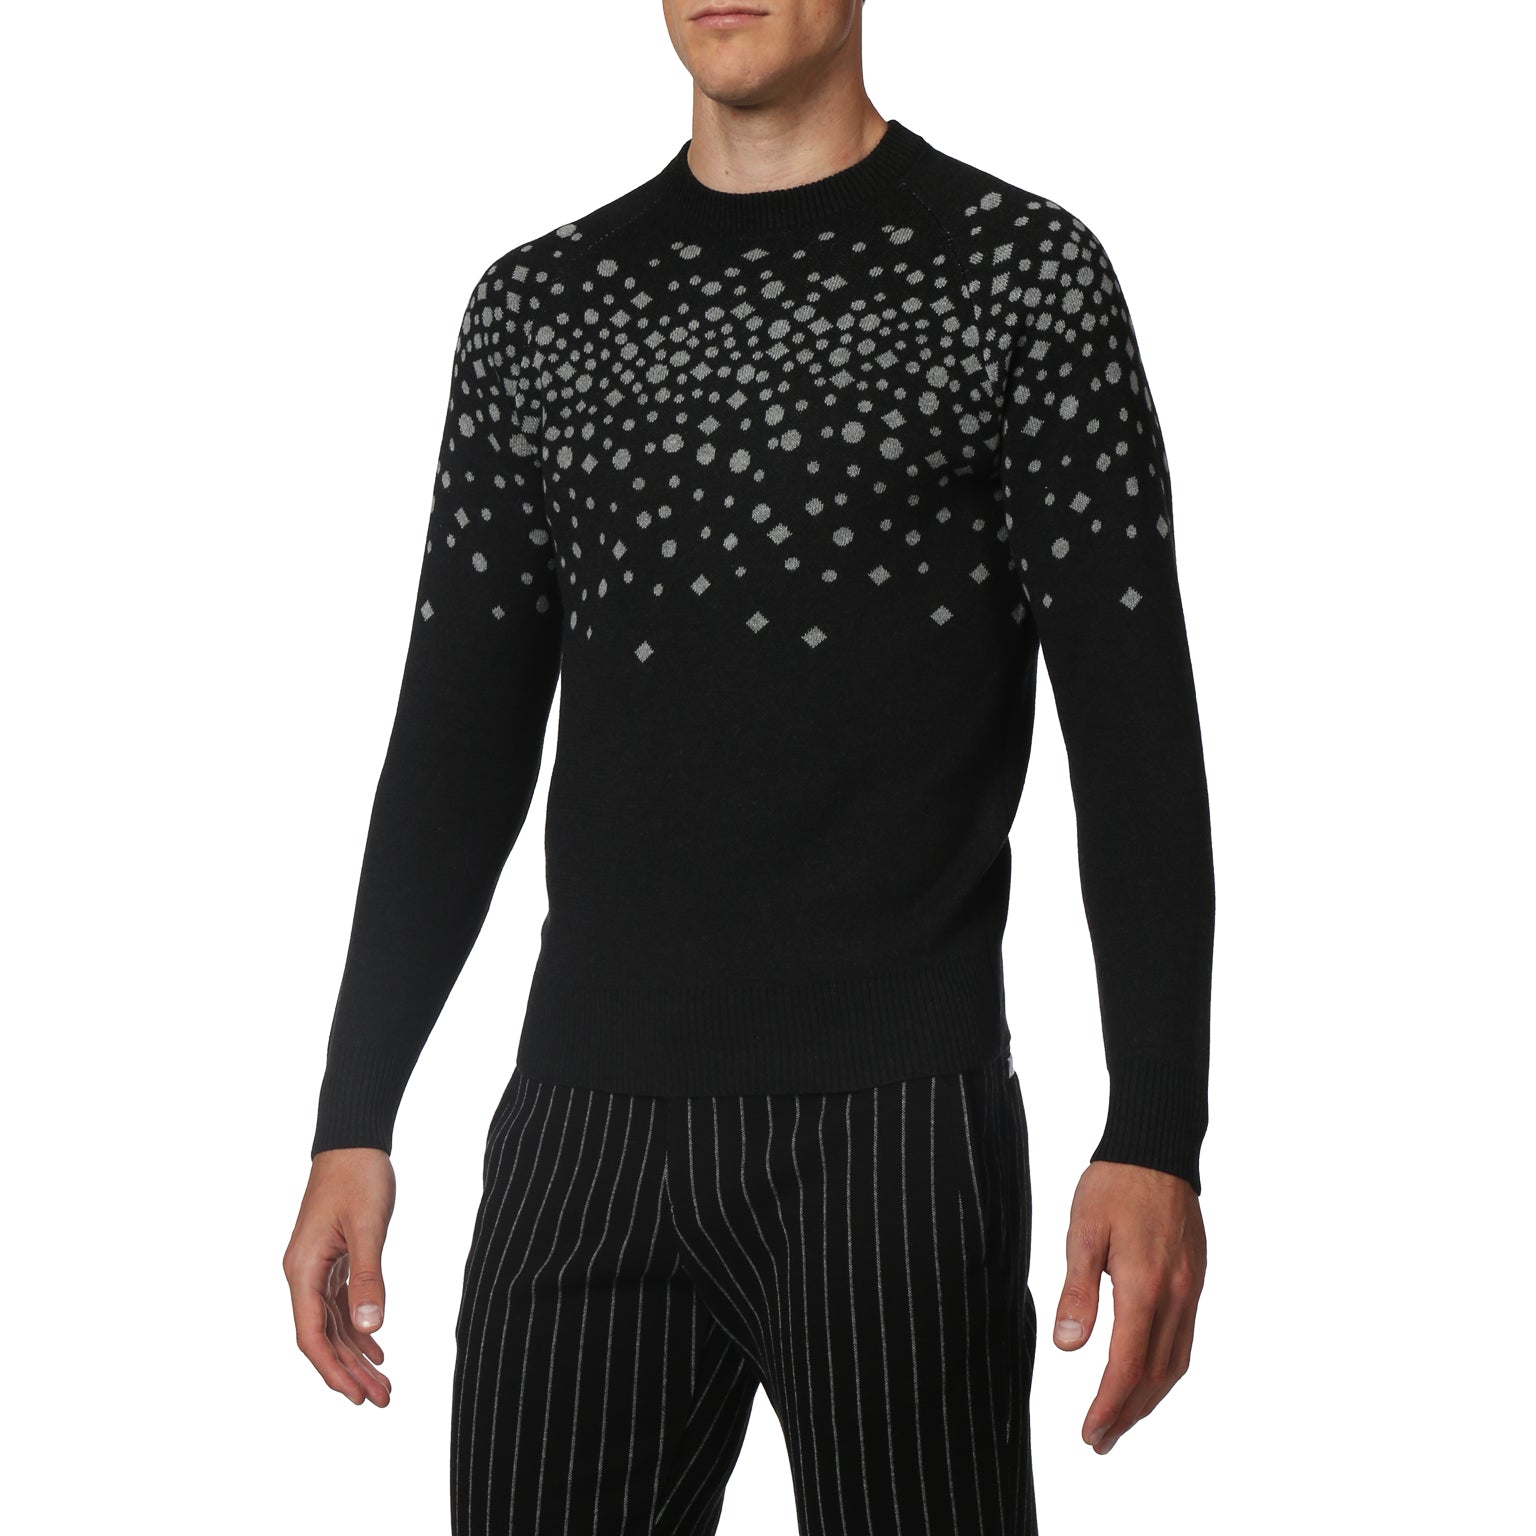 NEW- Space Black Starlight Sweater